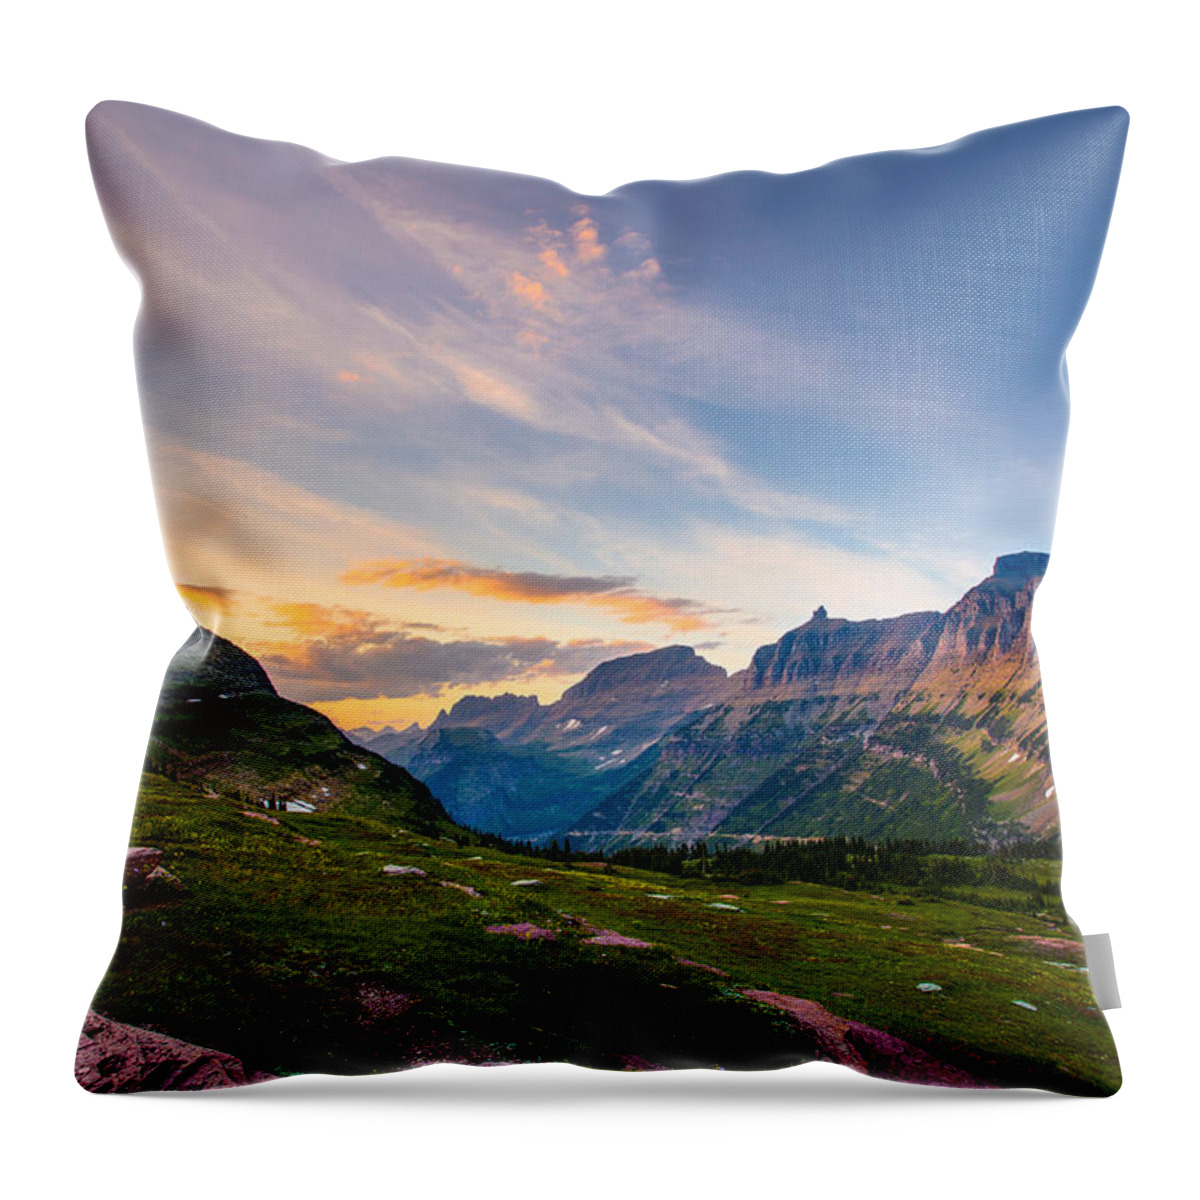 Glacier National Park Throw Pillow featuring the photograph Garden Wall Sunset by Adam Mateo Fierro